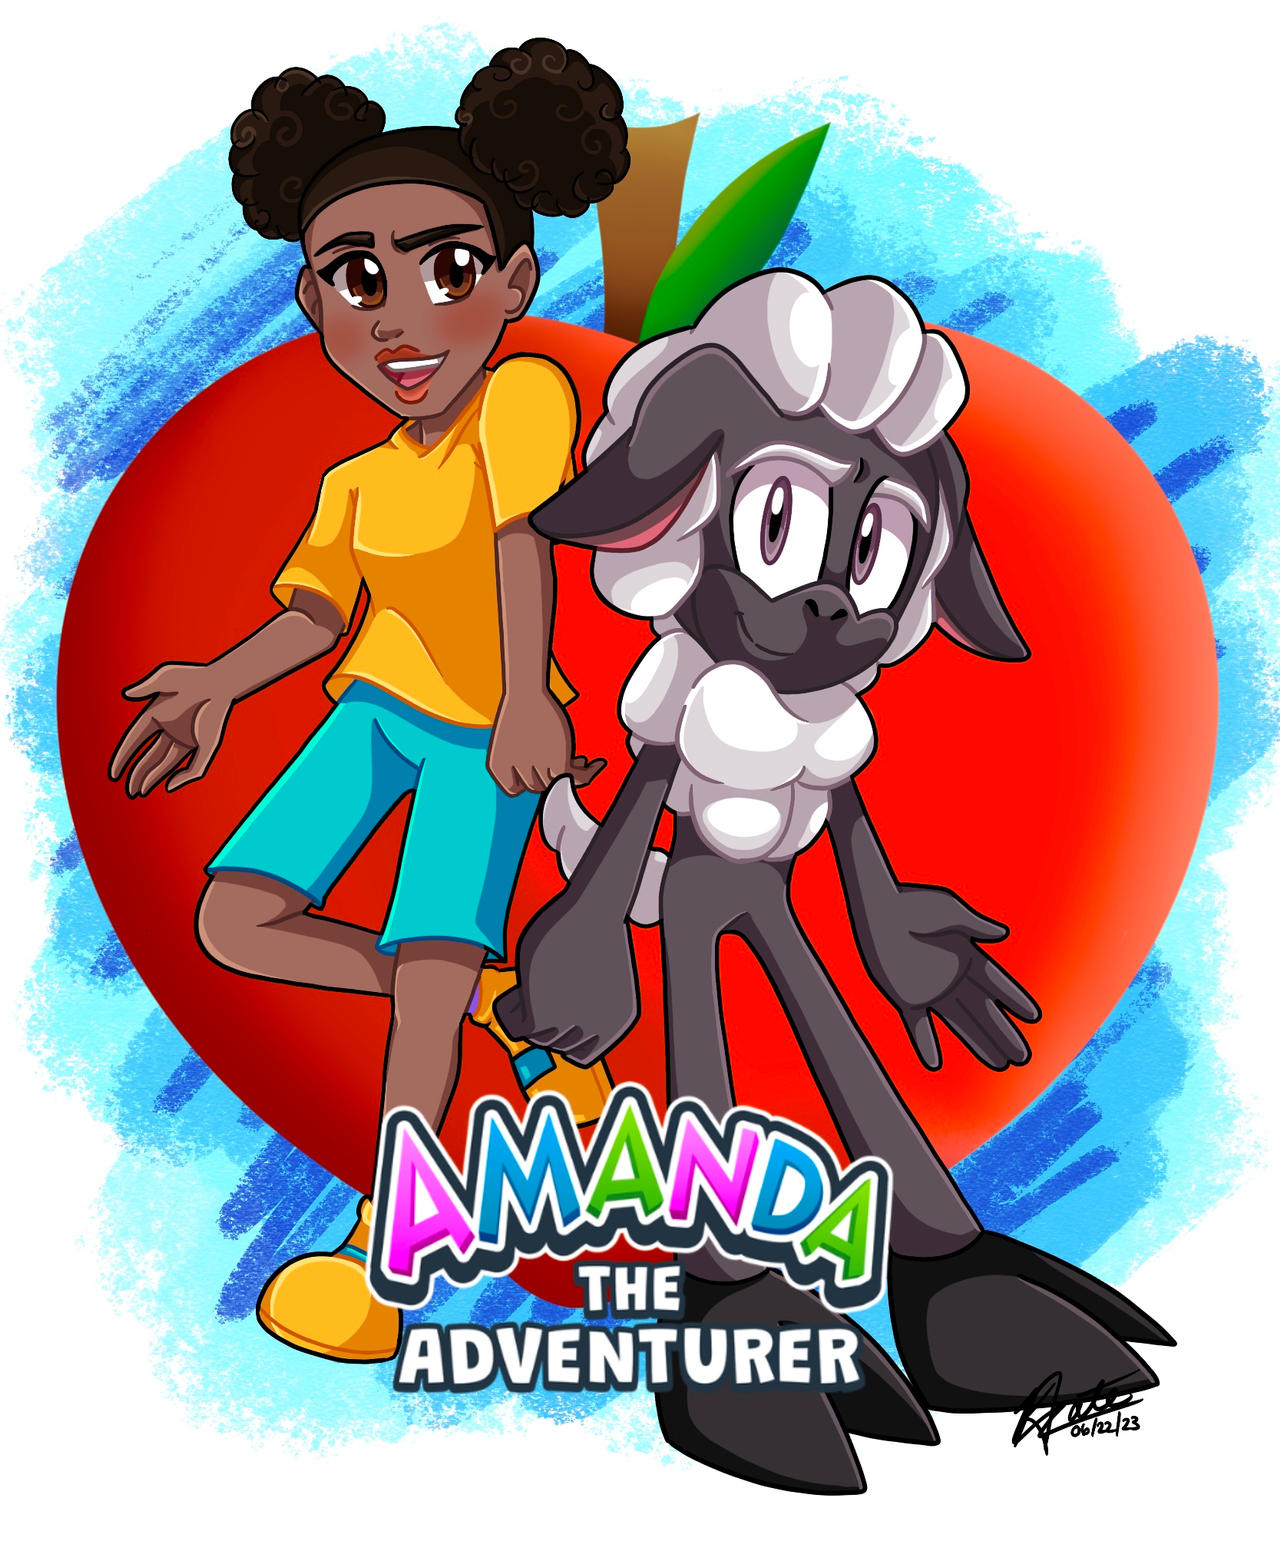 Amanda the Adventurer fan art by me : r/amandatheadventurer